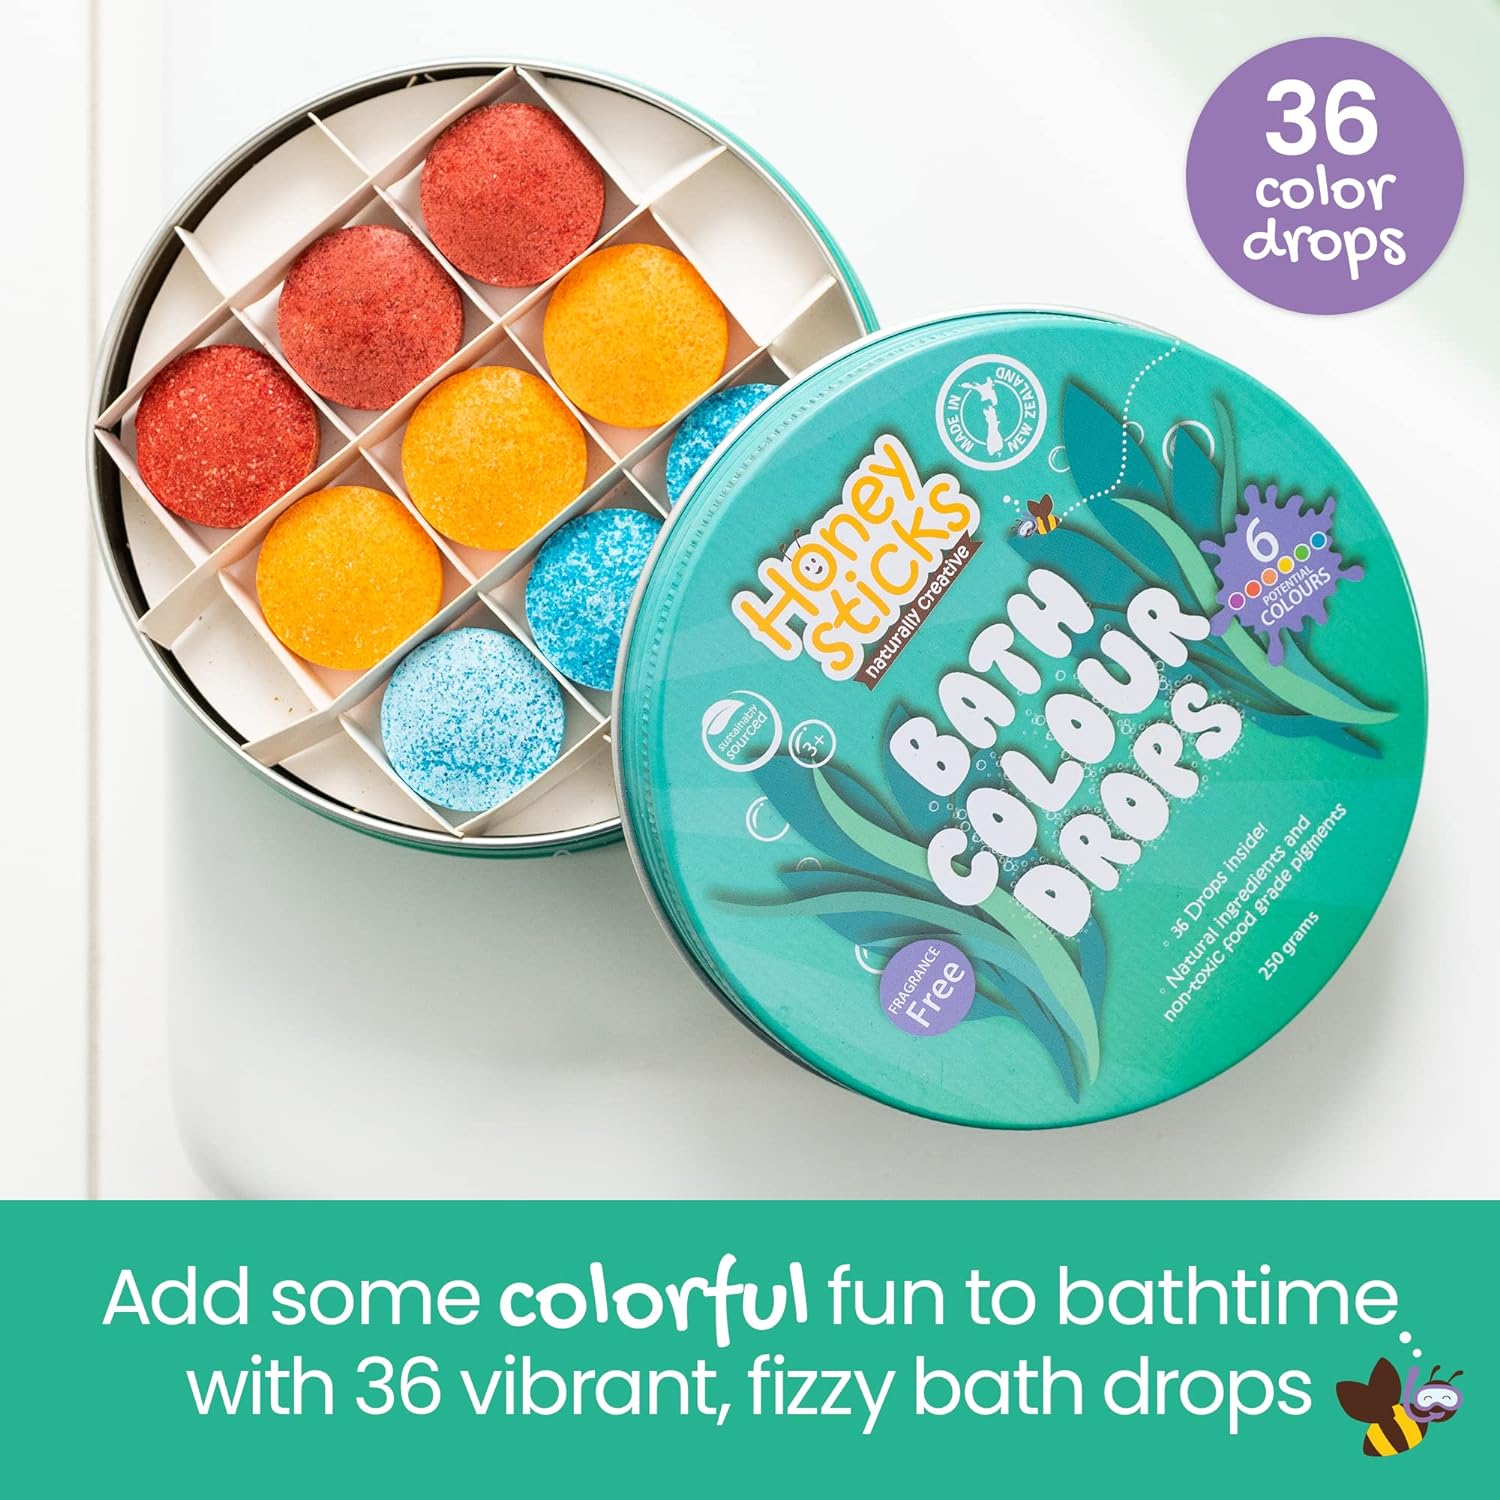 Honeysticks Bath Color Tablets for Kids Review